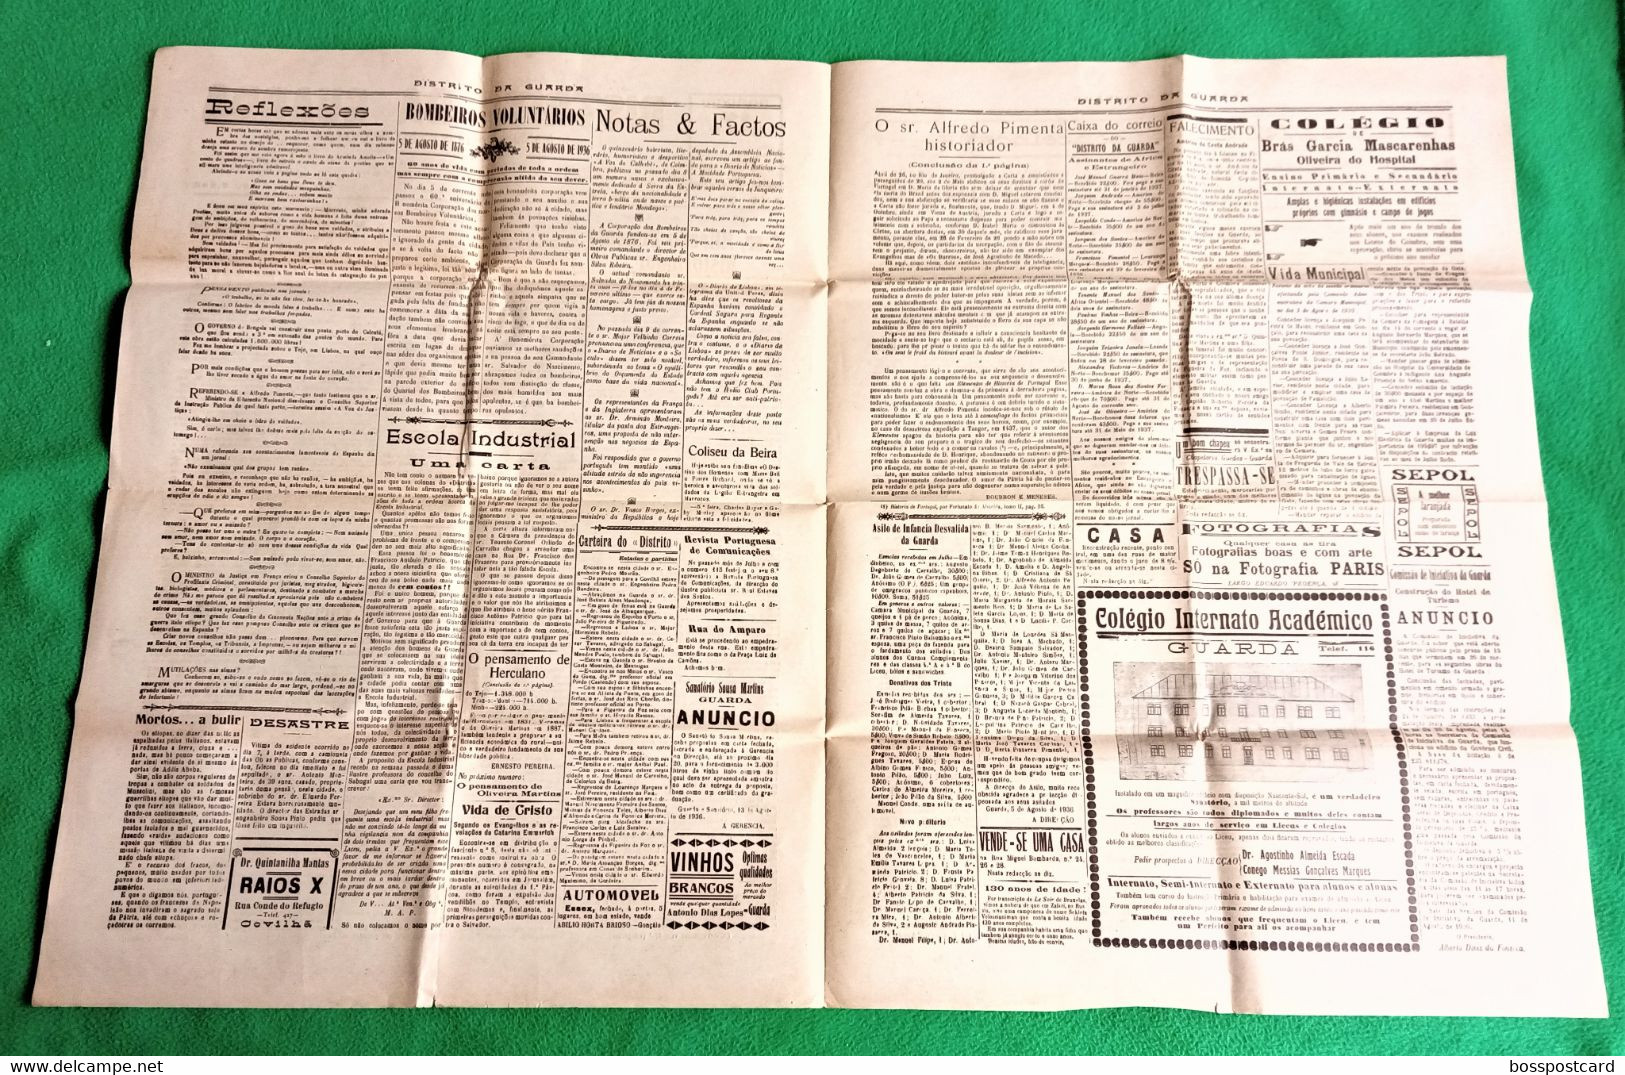 Guarda - Jornal Distrito Da Guarda Nº 2833, 16 De Agosto De 1936 - Imprensa - Portugal. - Informations Générales